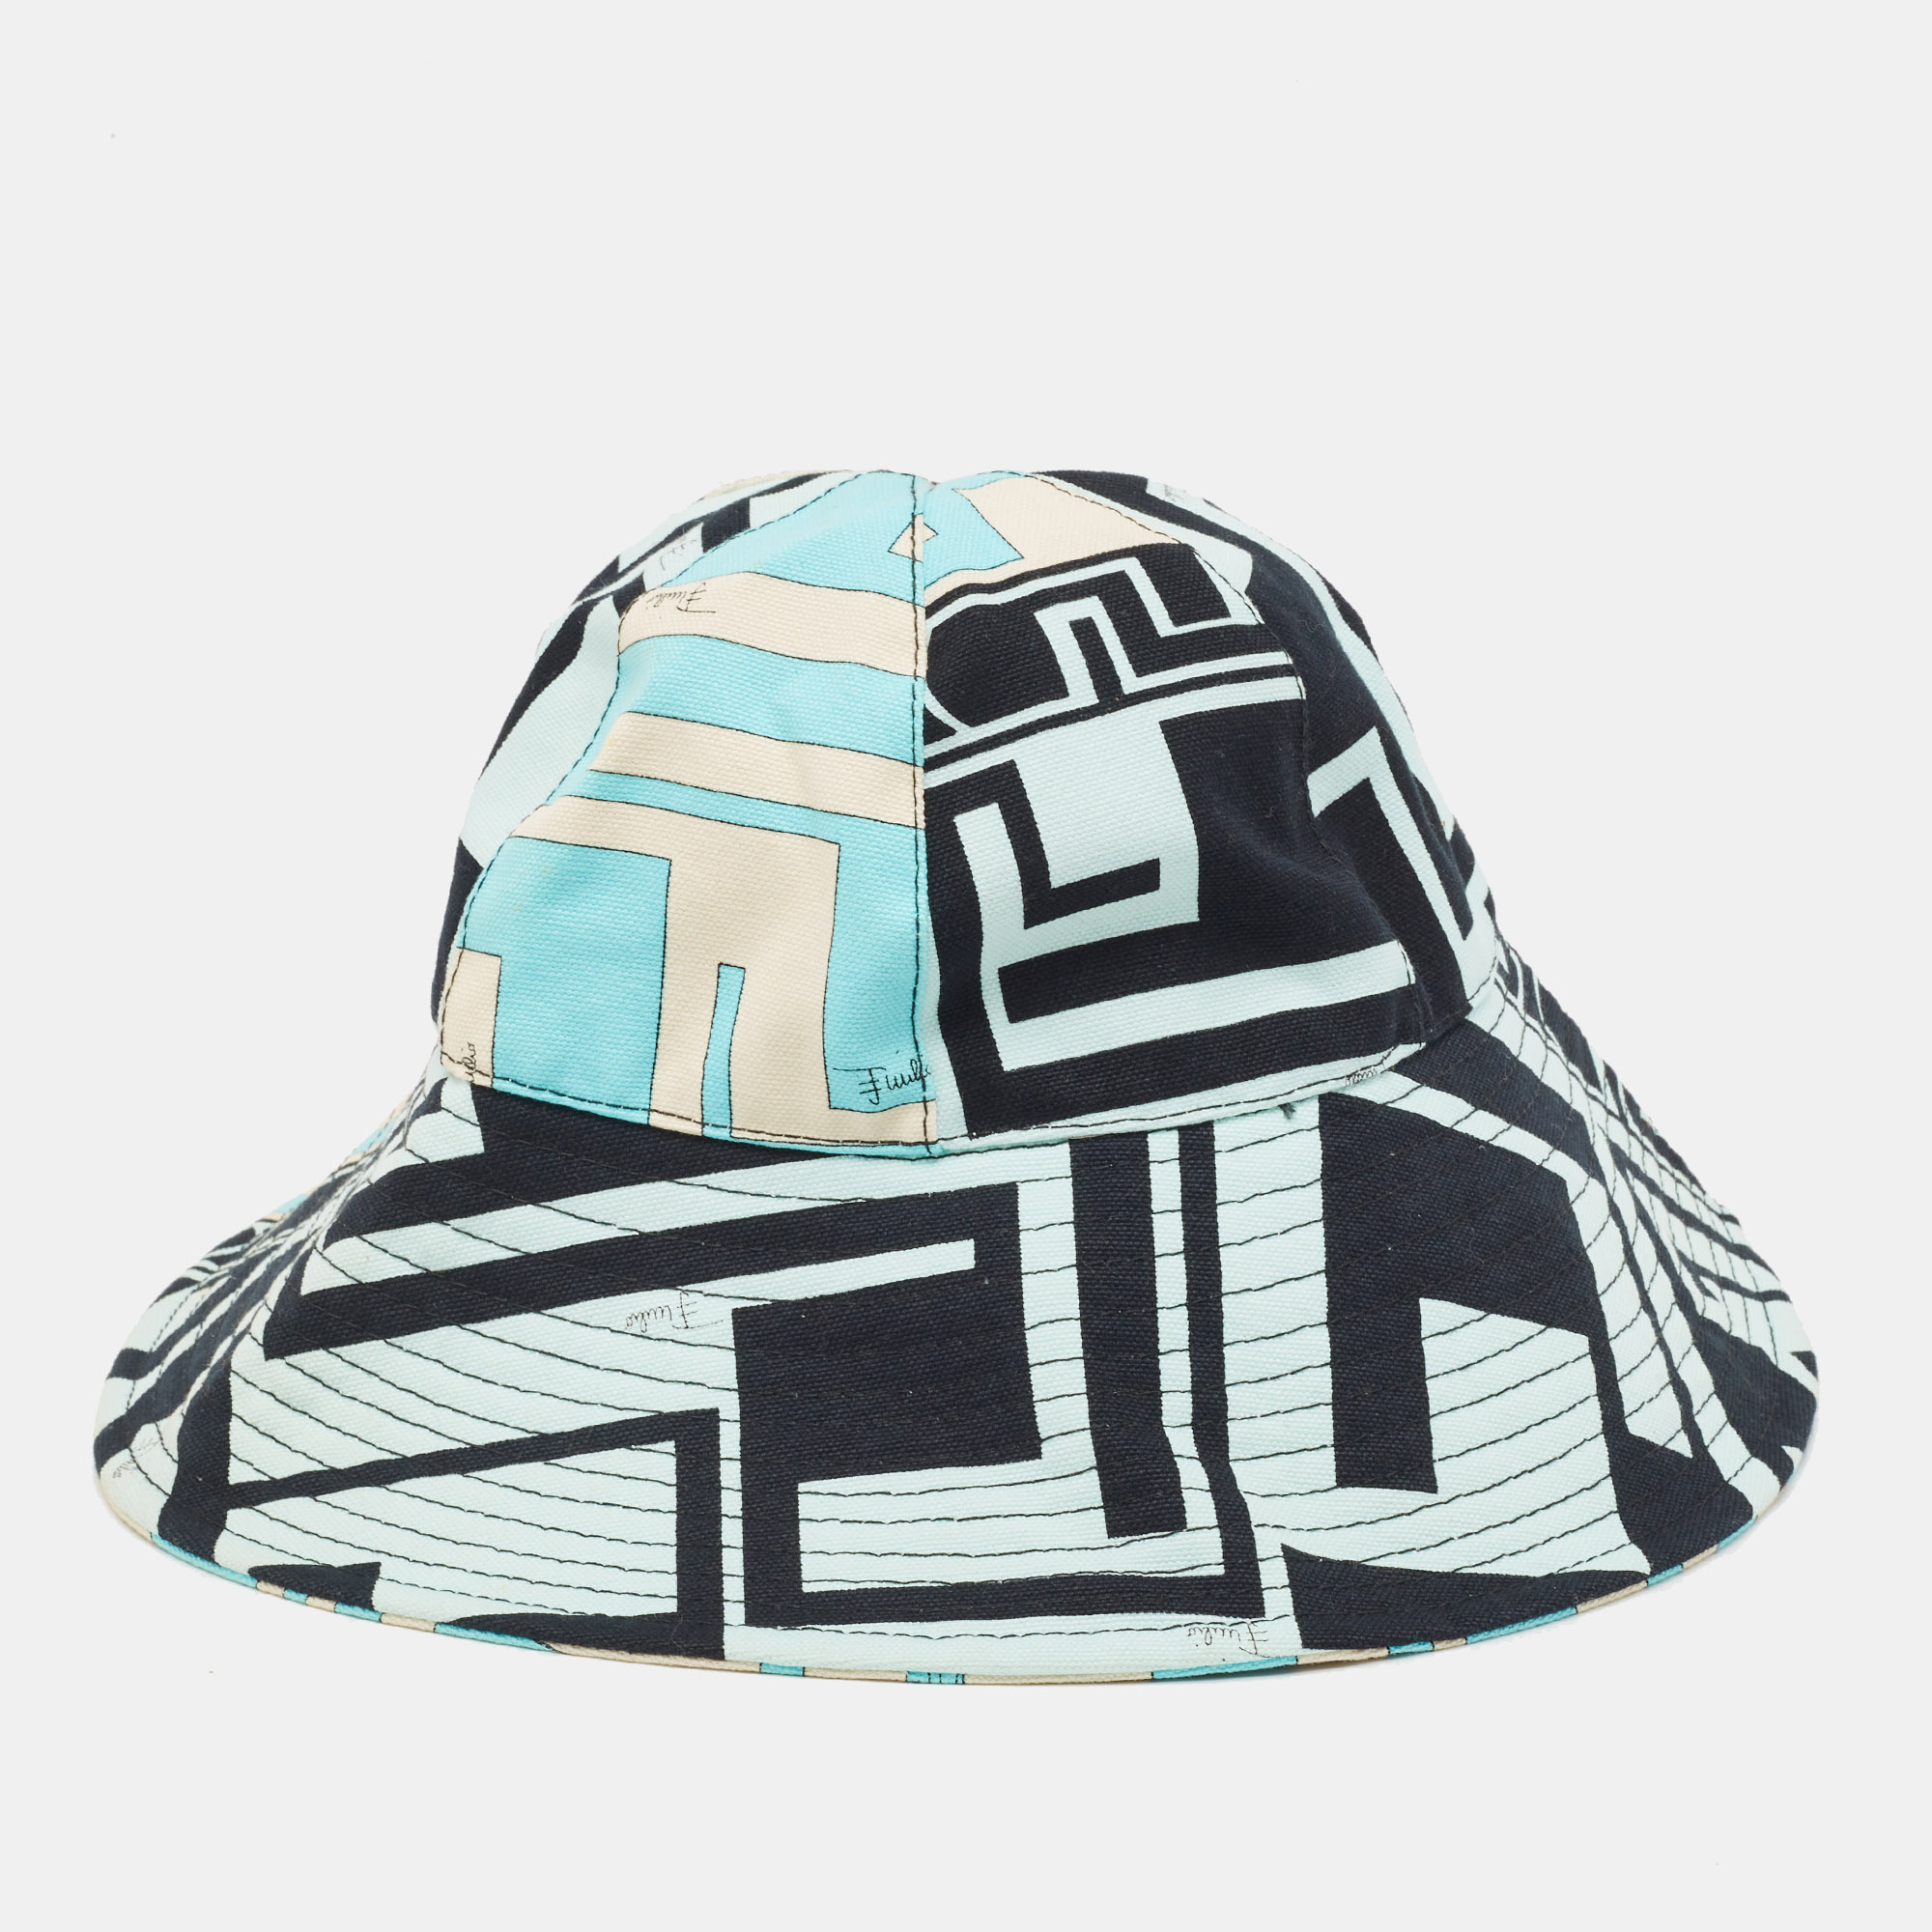 Emilio Pucci Multicolor Print Cotton Bucket Hat Size 54